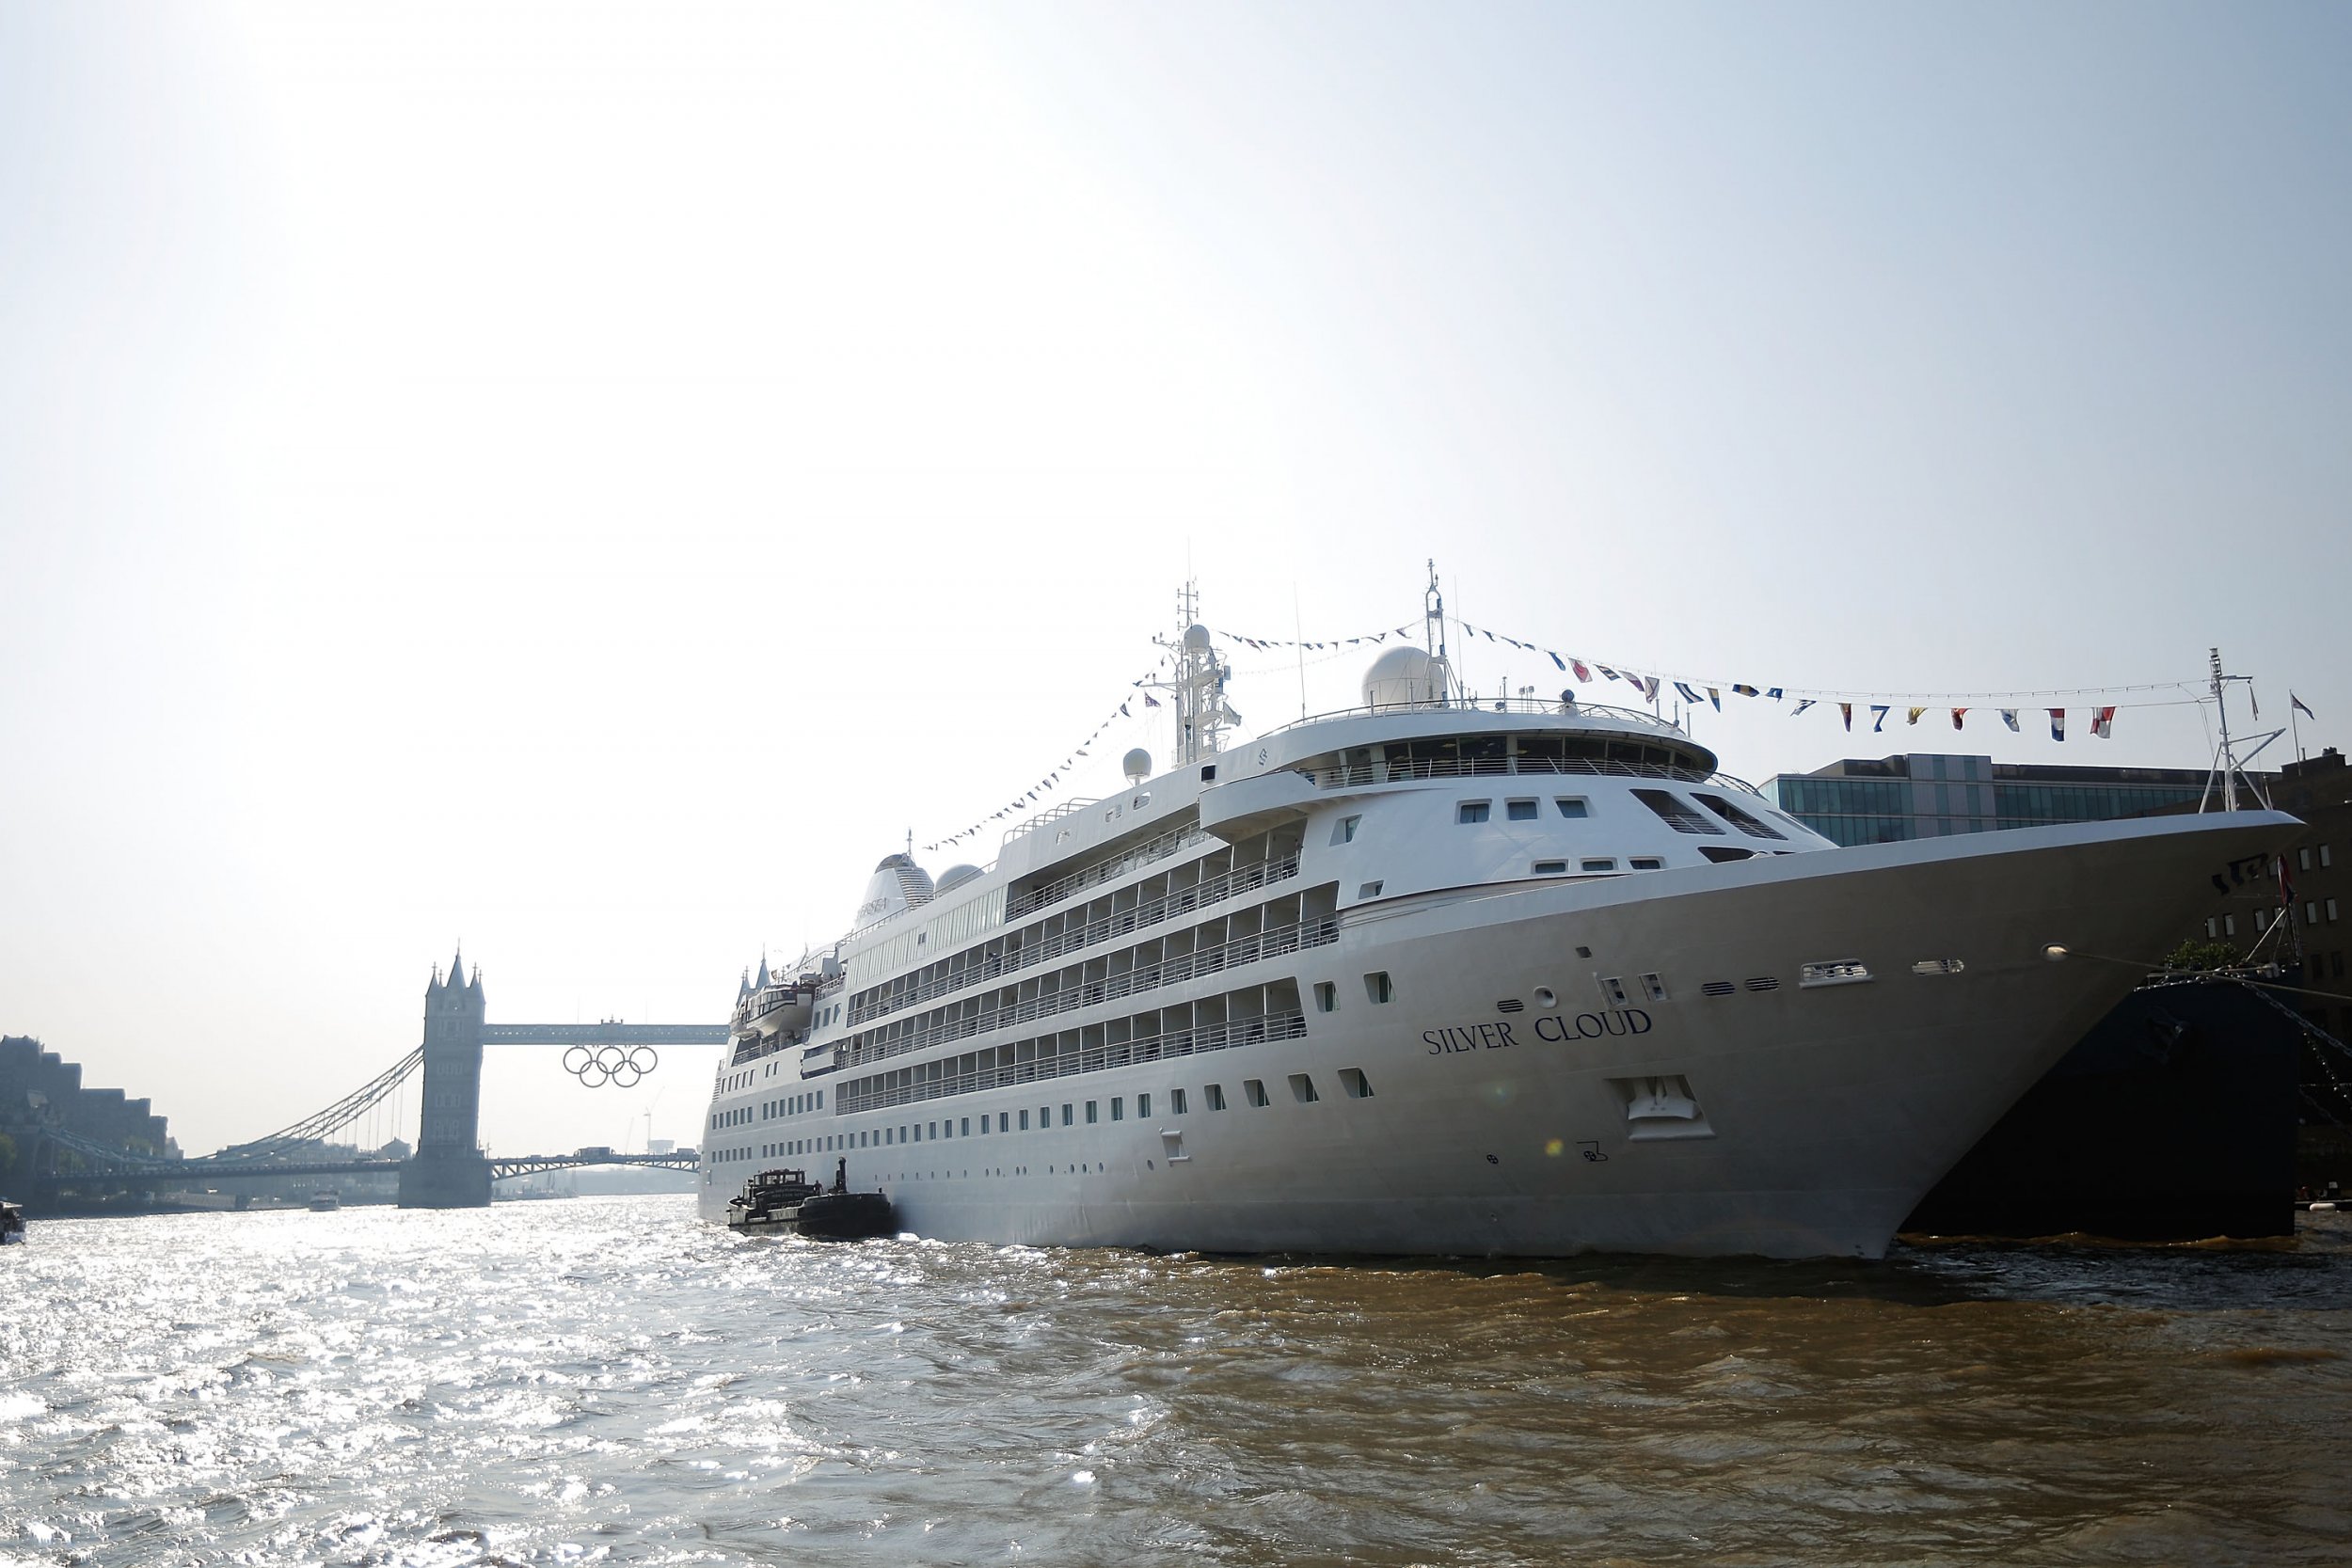 Cruise ship Greenwich